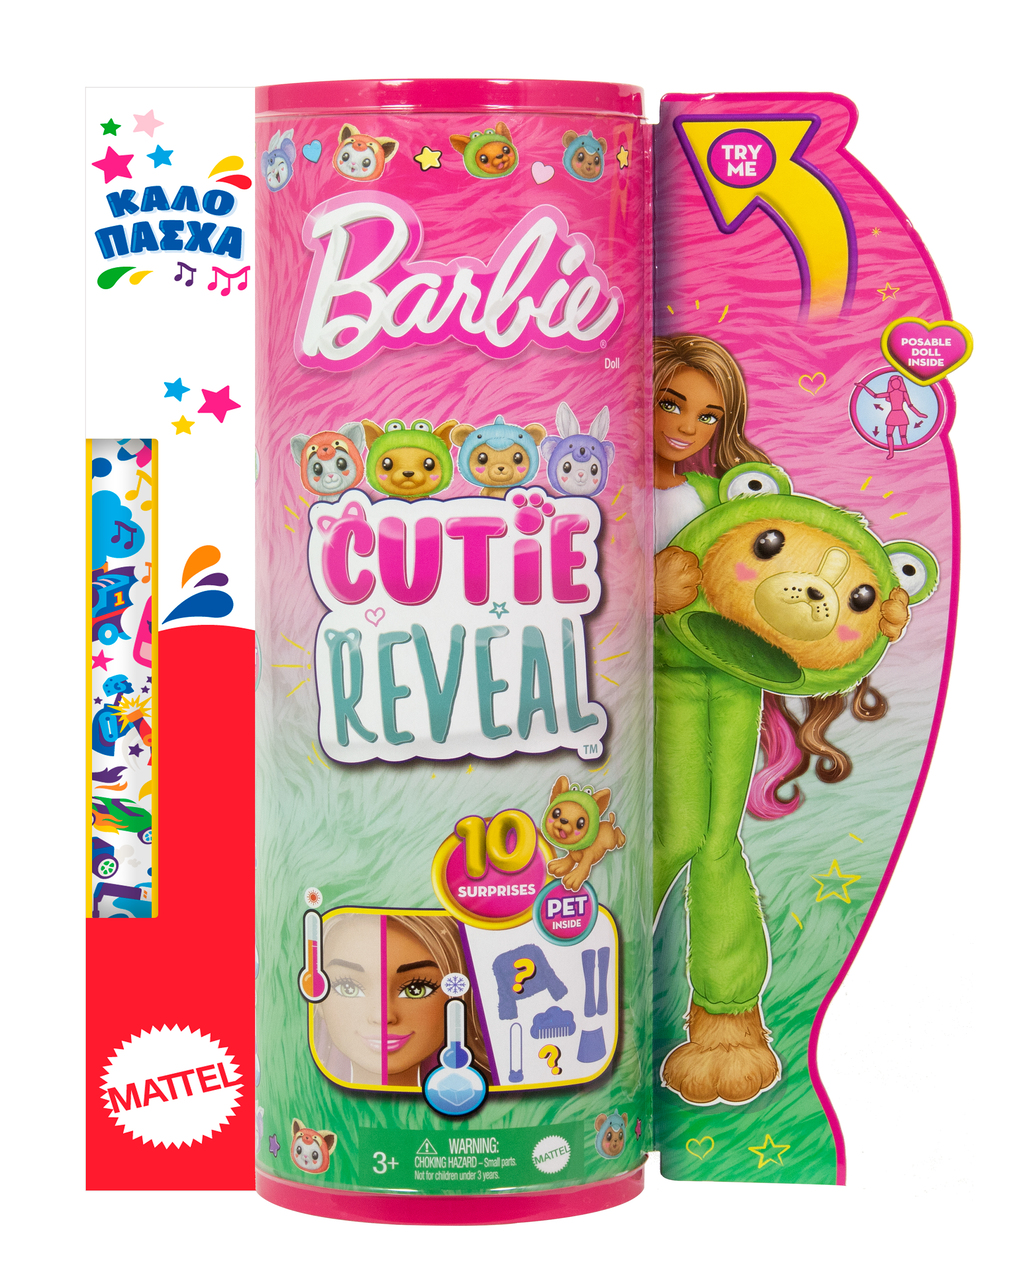 Barbie λαμπάδα cutie reveal κούκλα και αξεσουάρ με 10 εκπλήξεις hrk24 - BARBIE